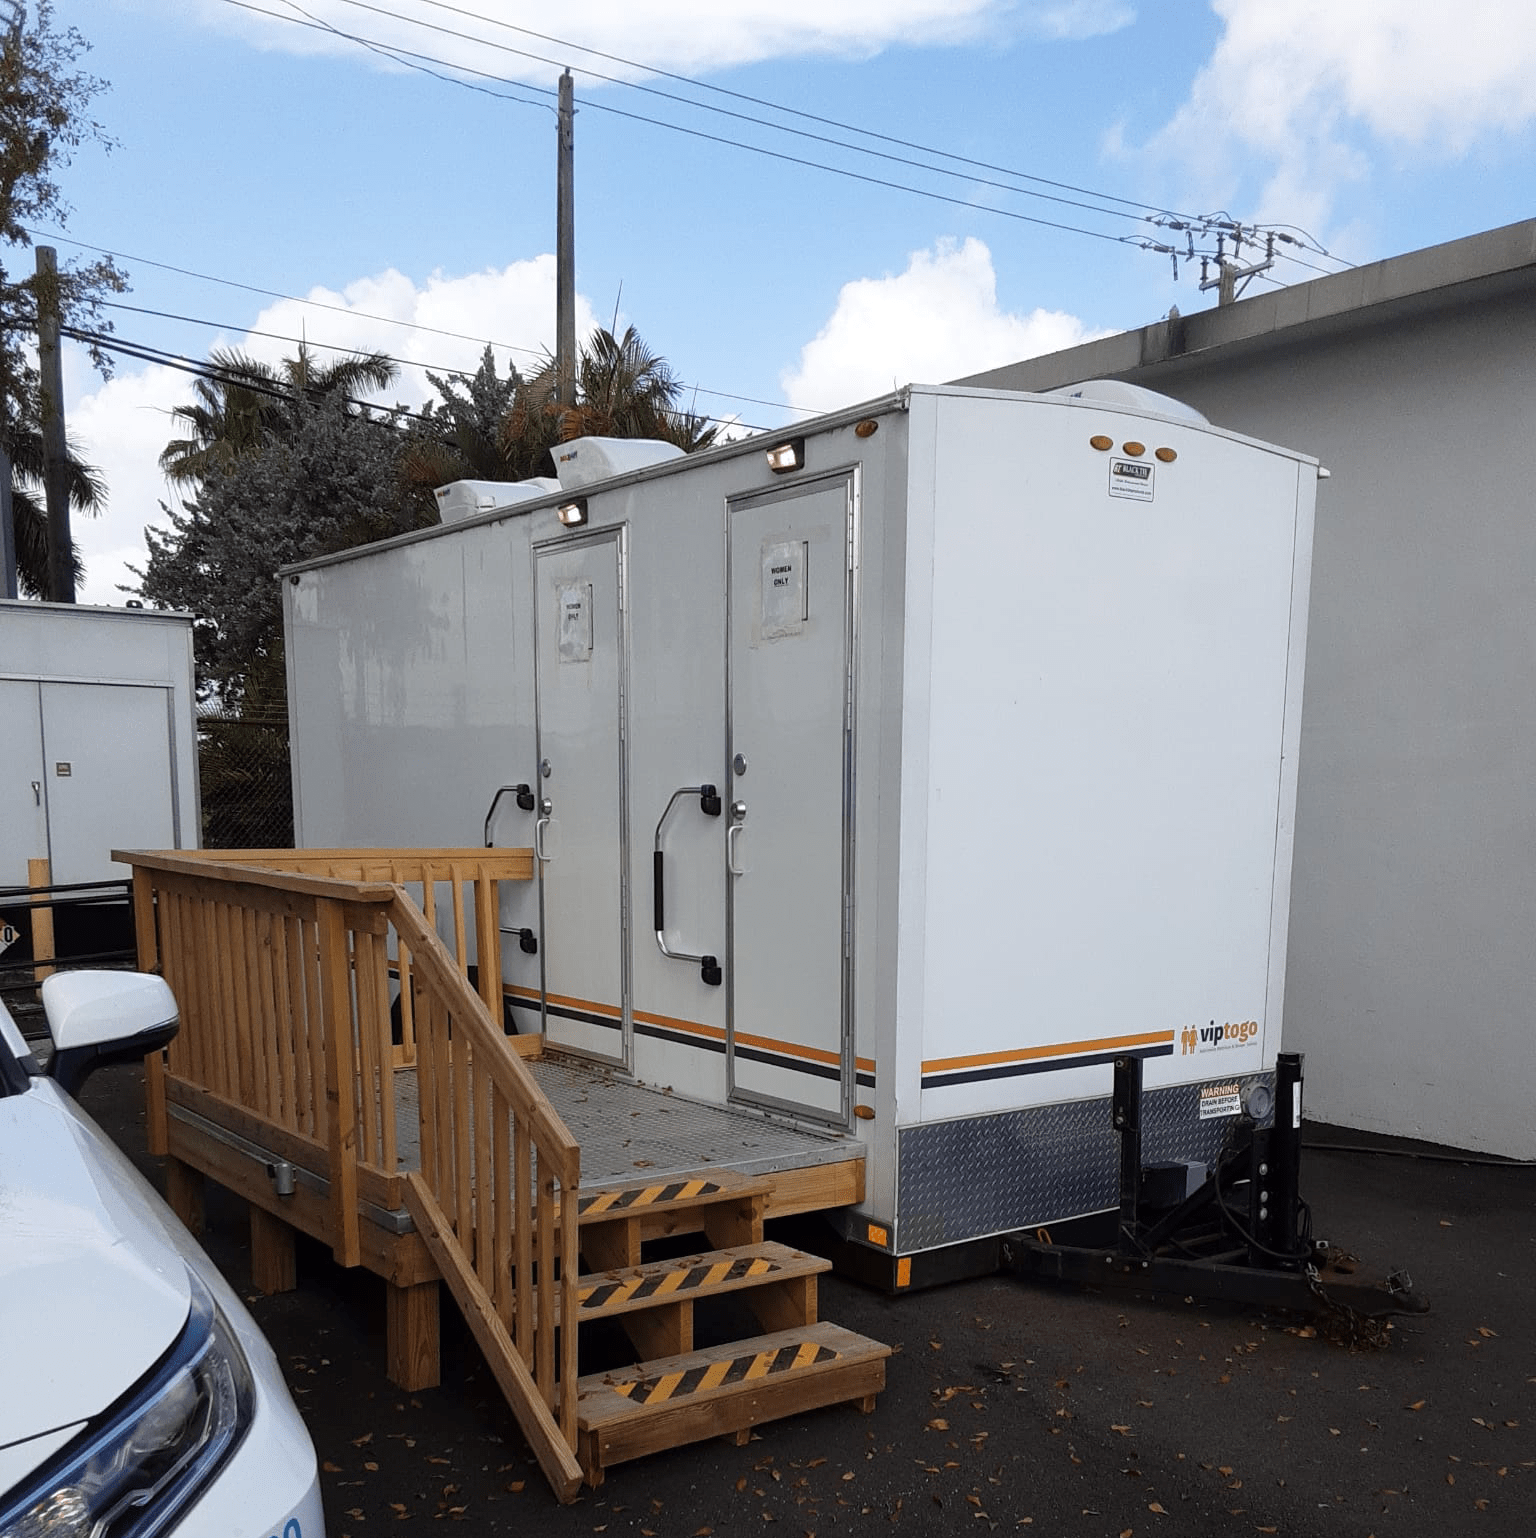 Construction site luxury restroom trailer, Venice, FL